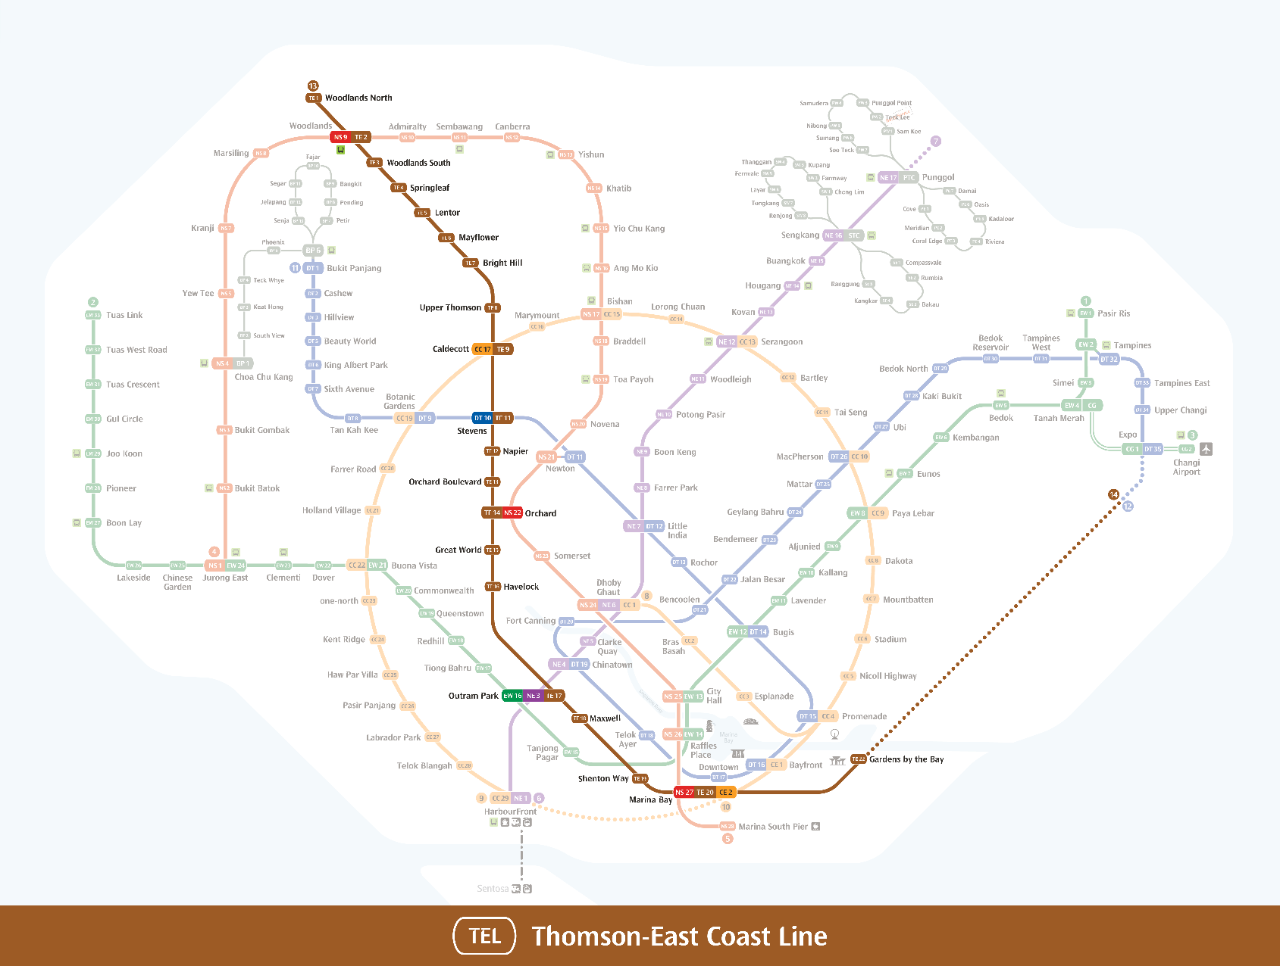 The Thomson-East Coast Line of Singapores MRT